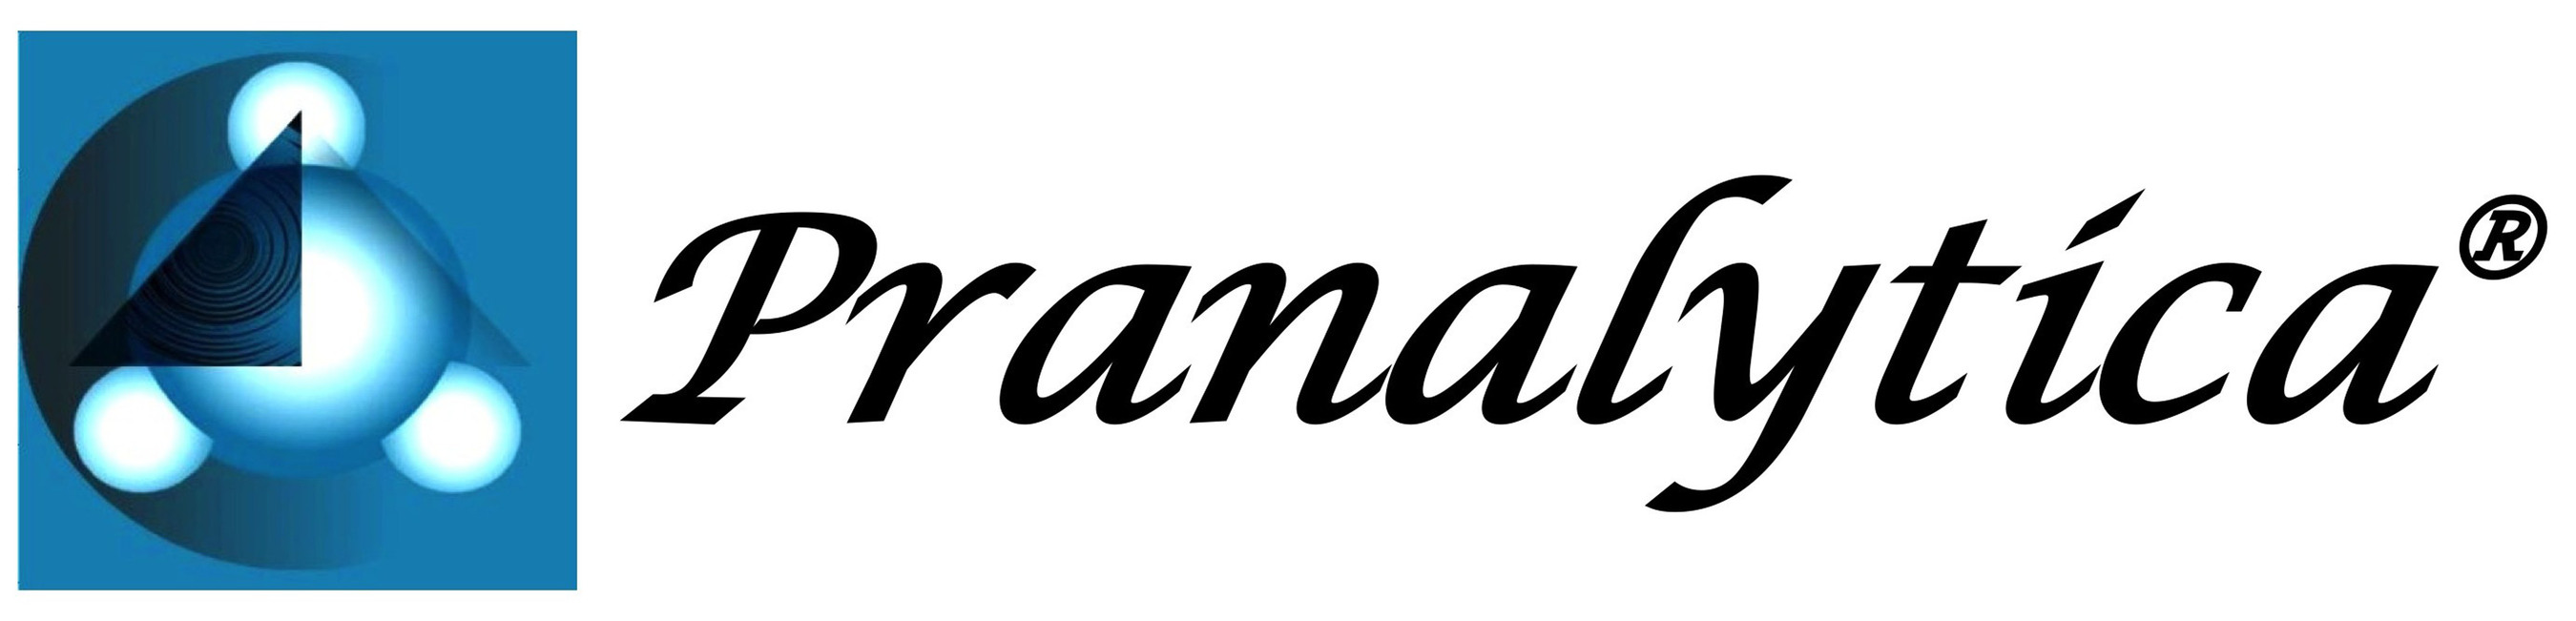 Pranalytica, Inc